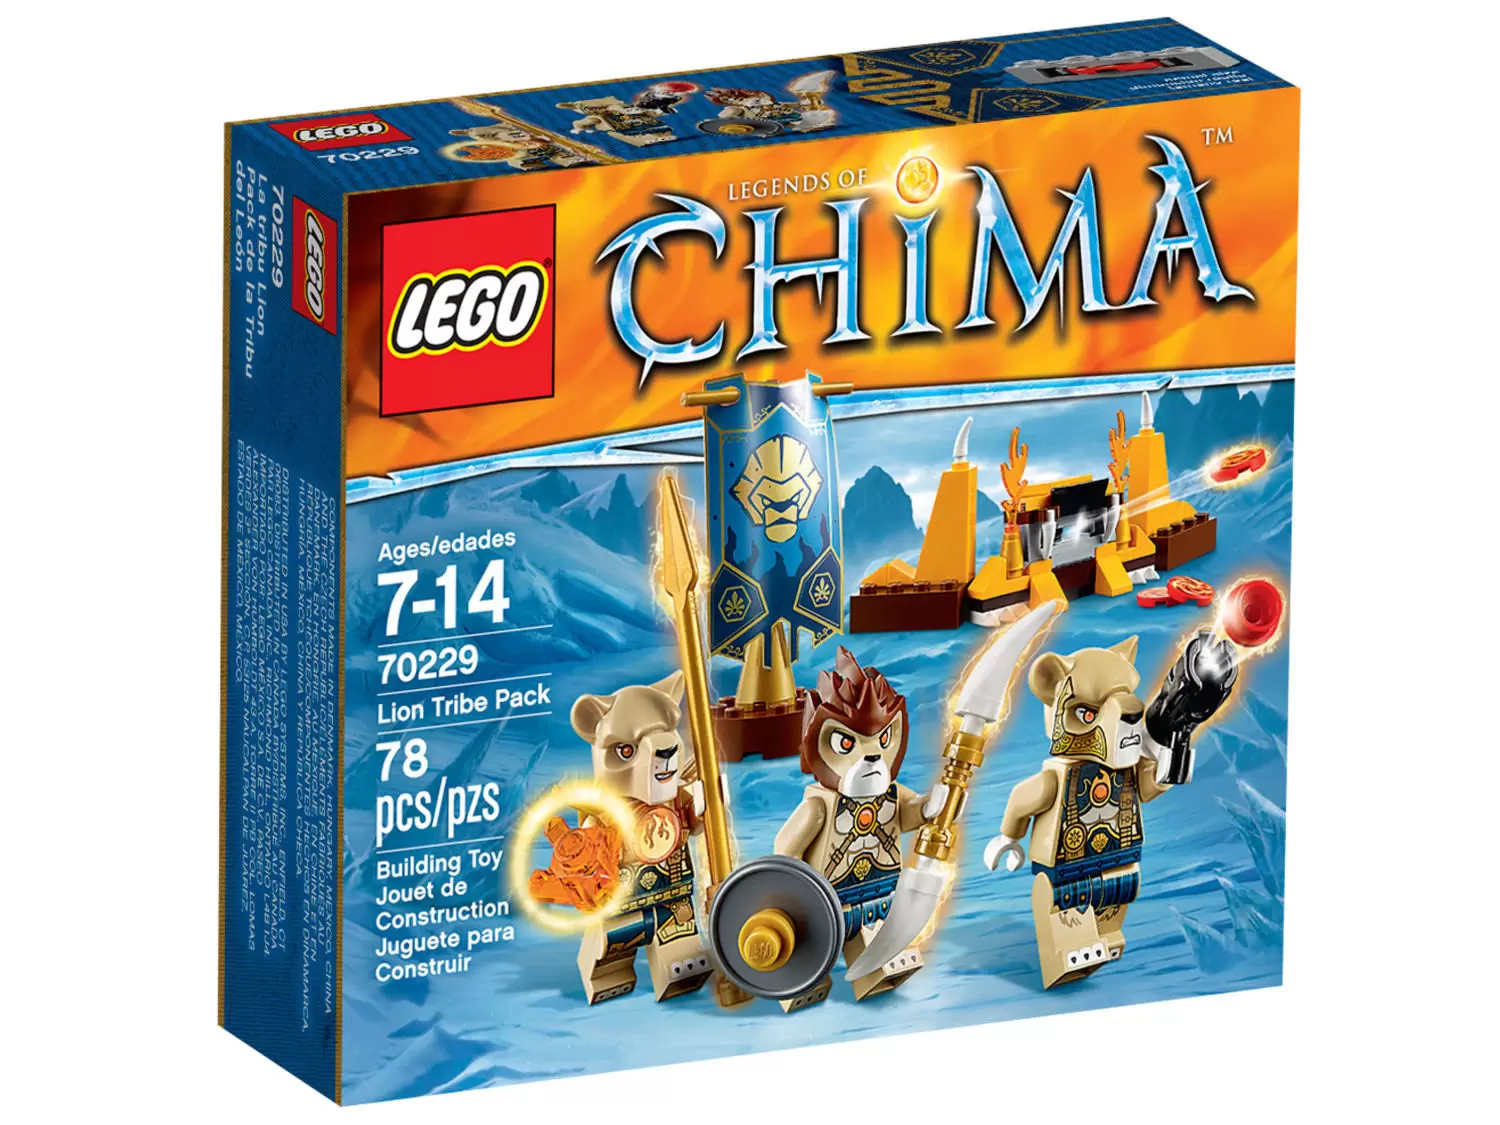 LEGO Legends of Chima - La Tribu Lion